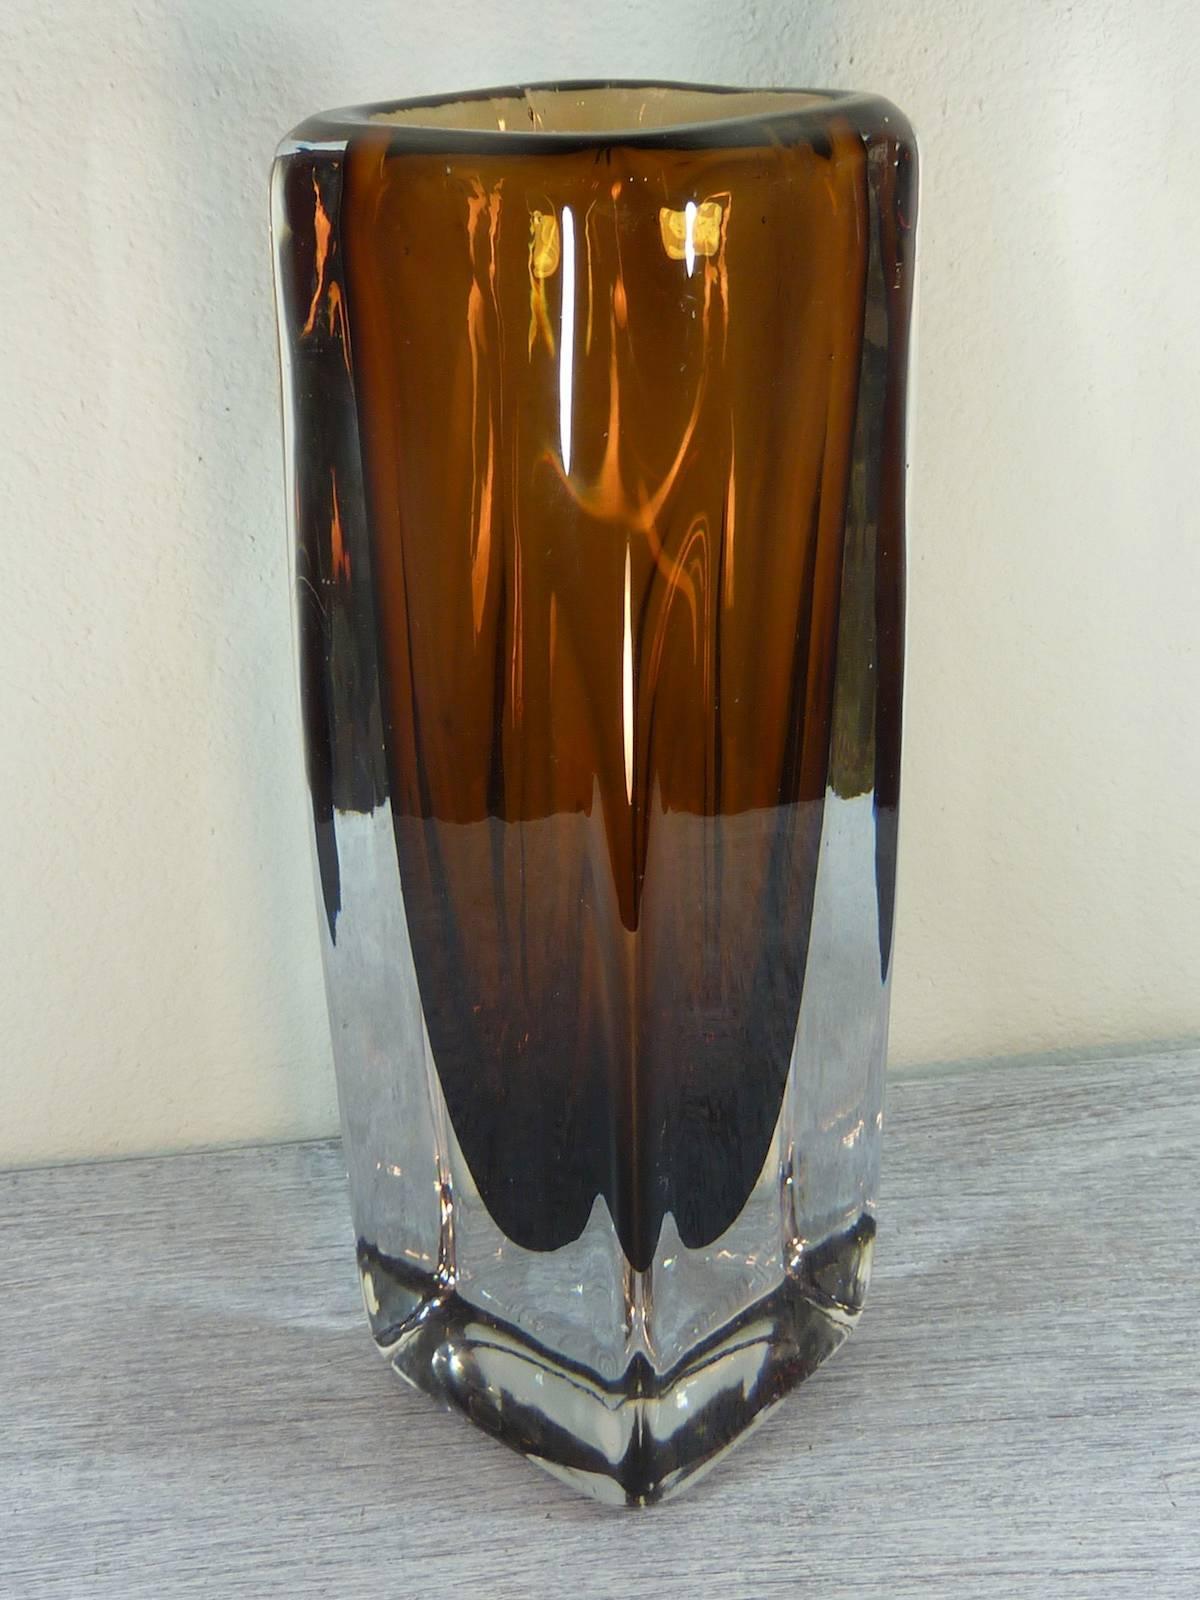 1970s glass vases